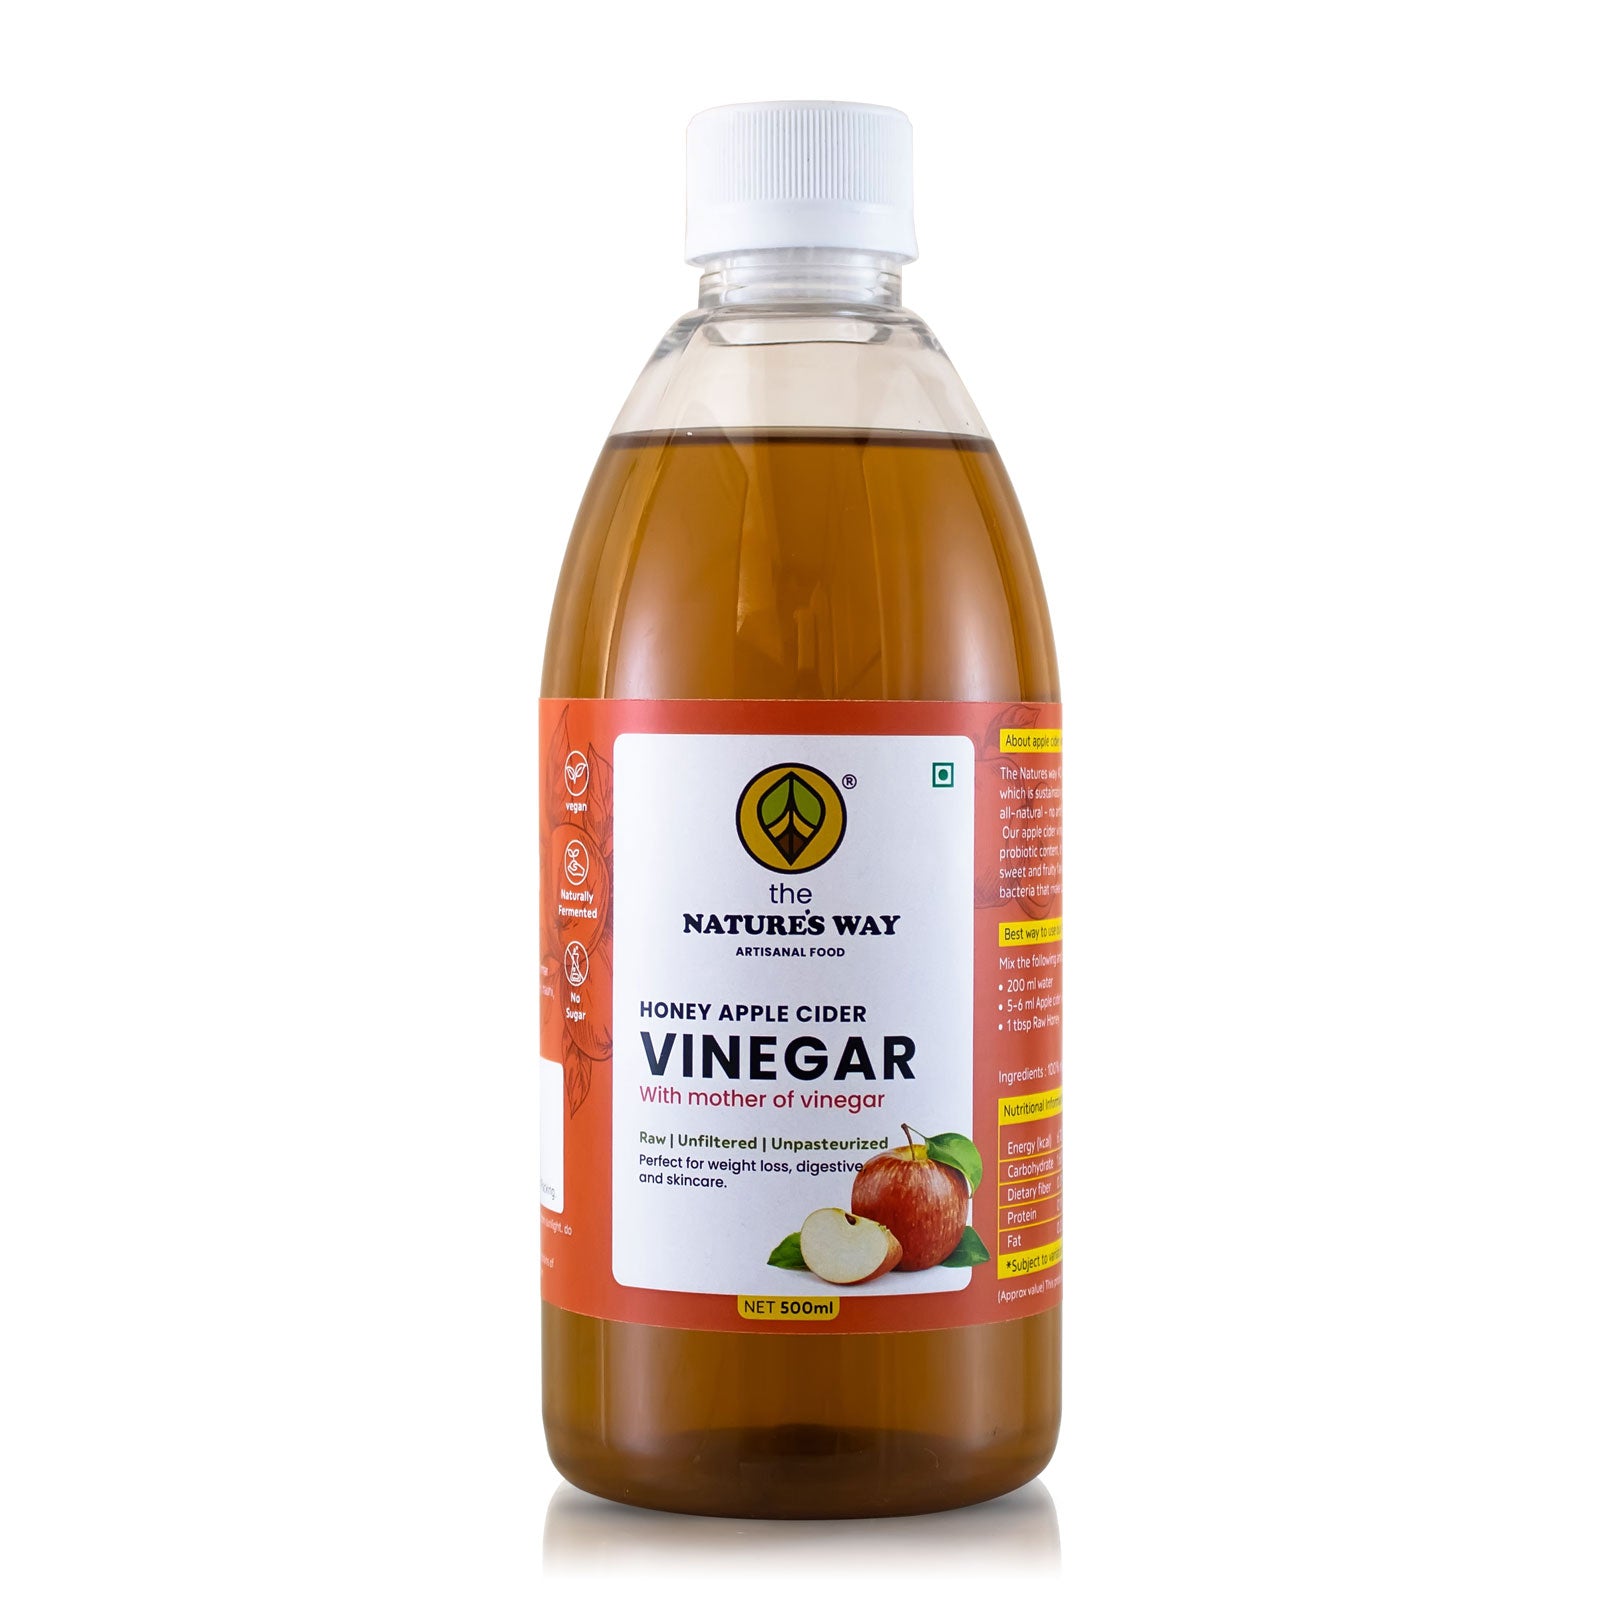 The Natures Way Honey Apple Cider Vinegar